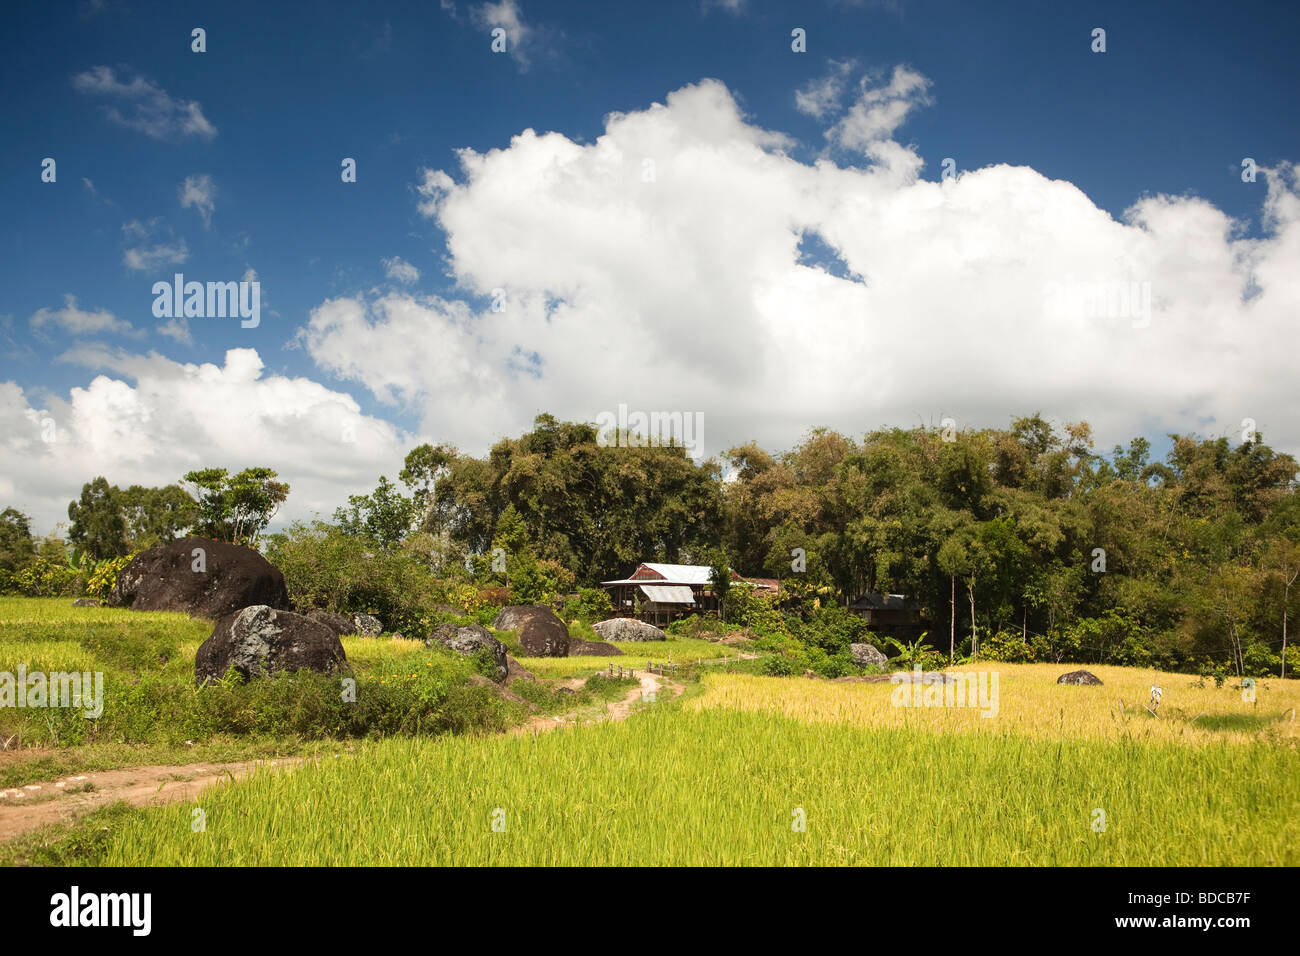 Indonesia Sulawesi Tana Toraja Tikala farmhouse amongst remote rural village paddy fields Stock Photo